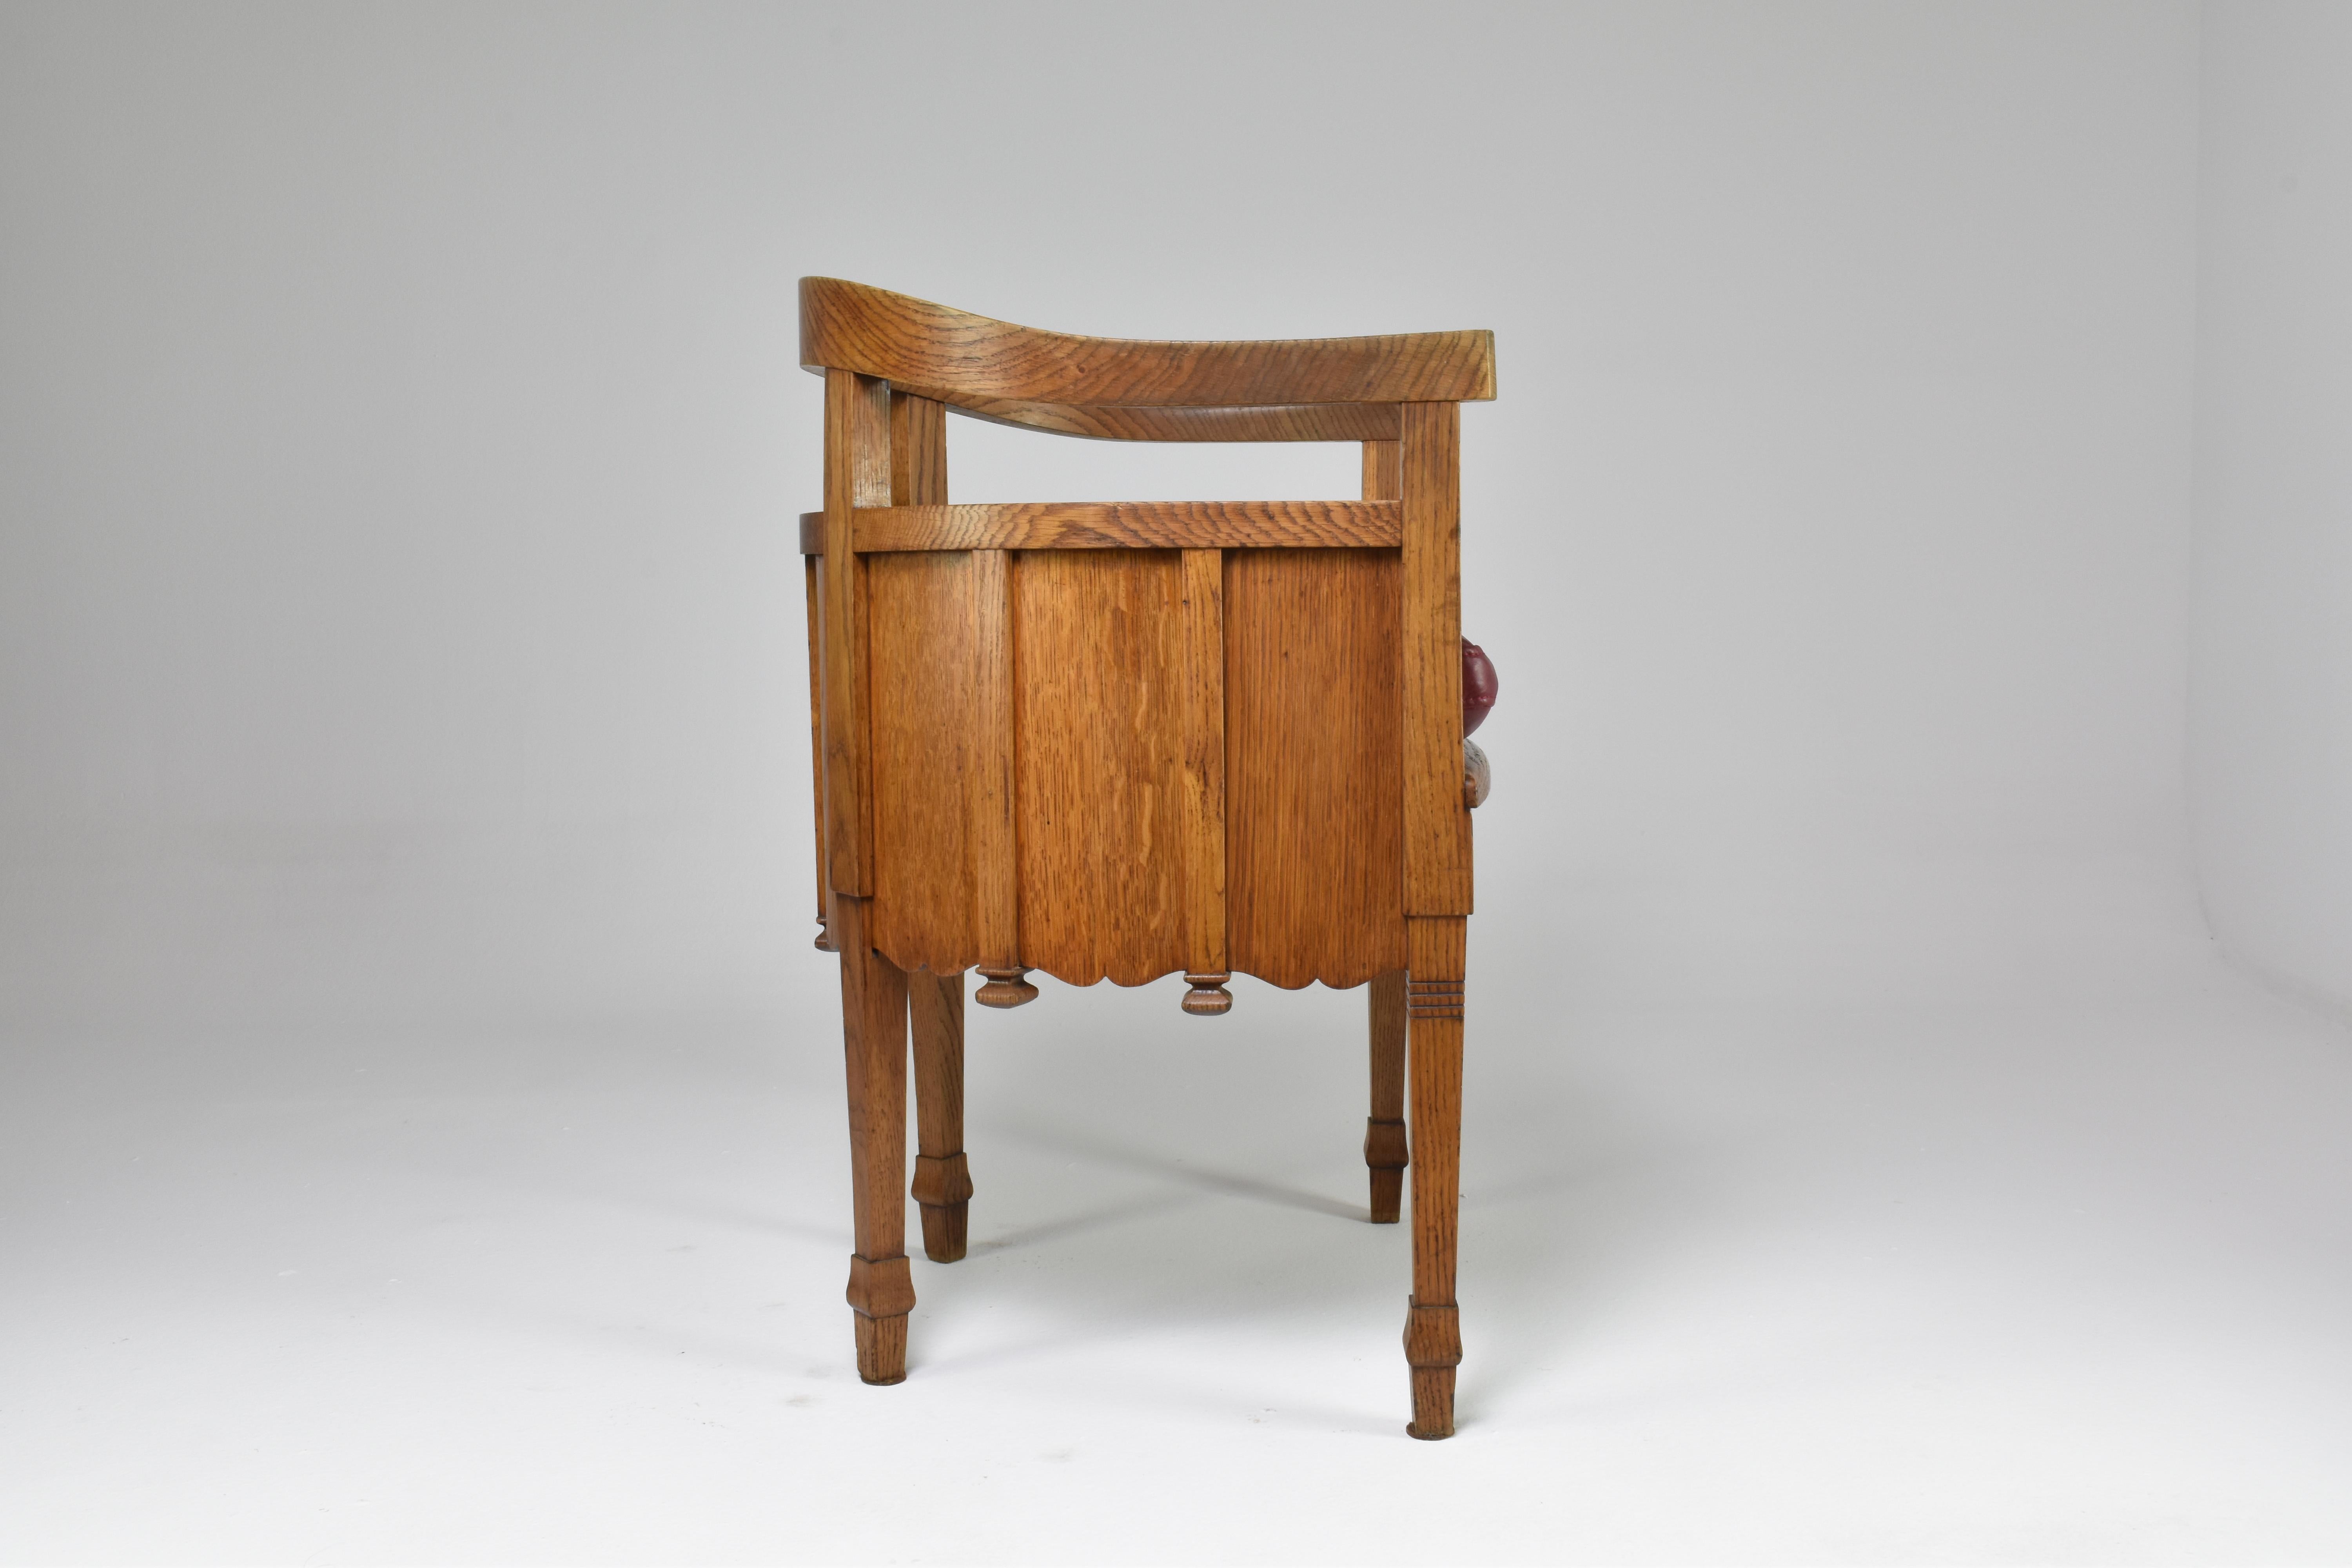  1920's French Sculpted Oak Art Nouveau Desk with Chair For Sale 15